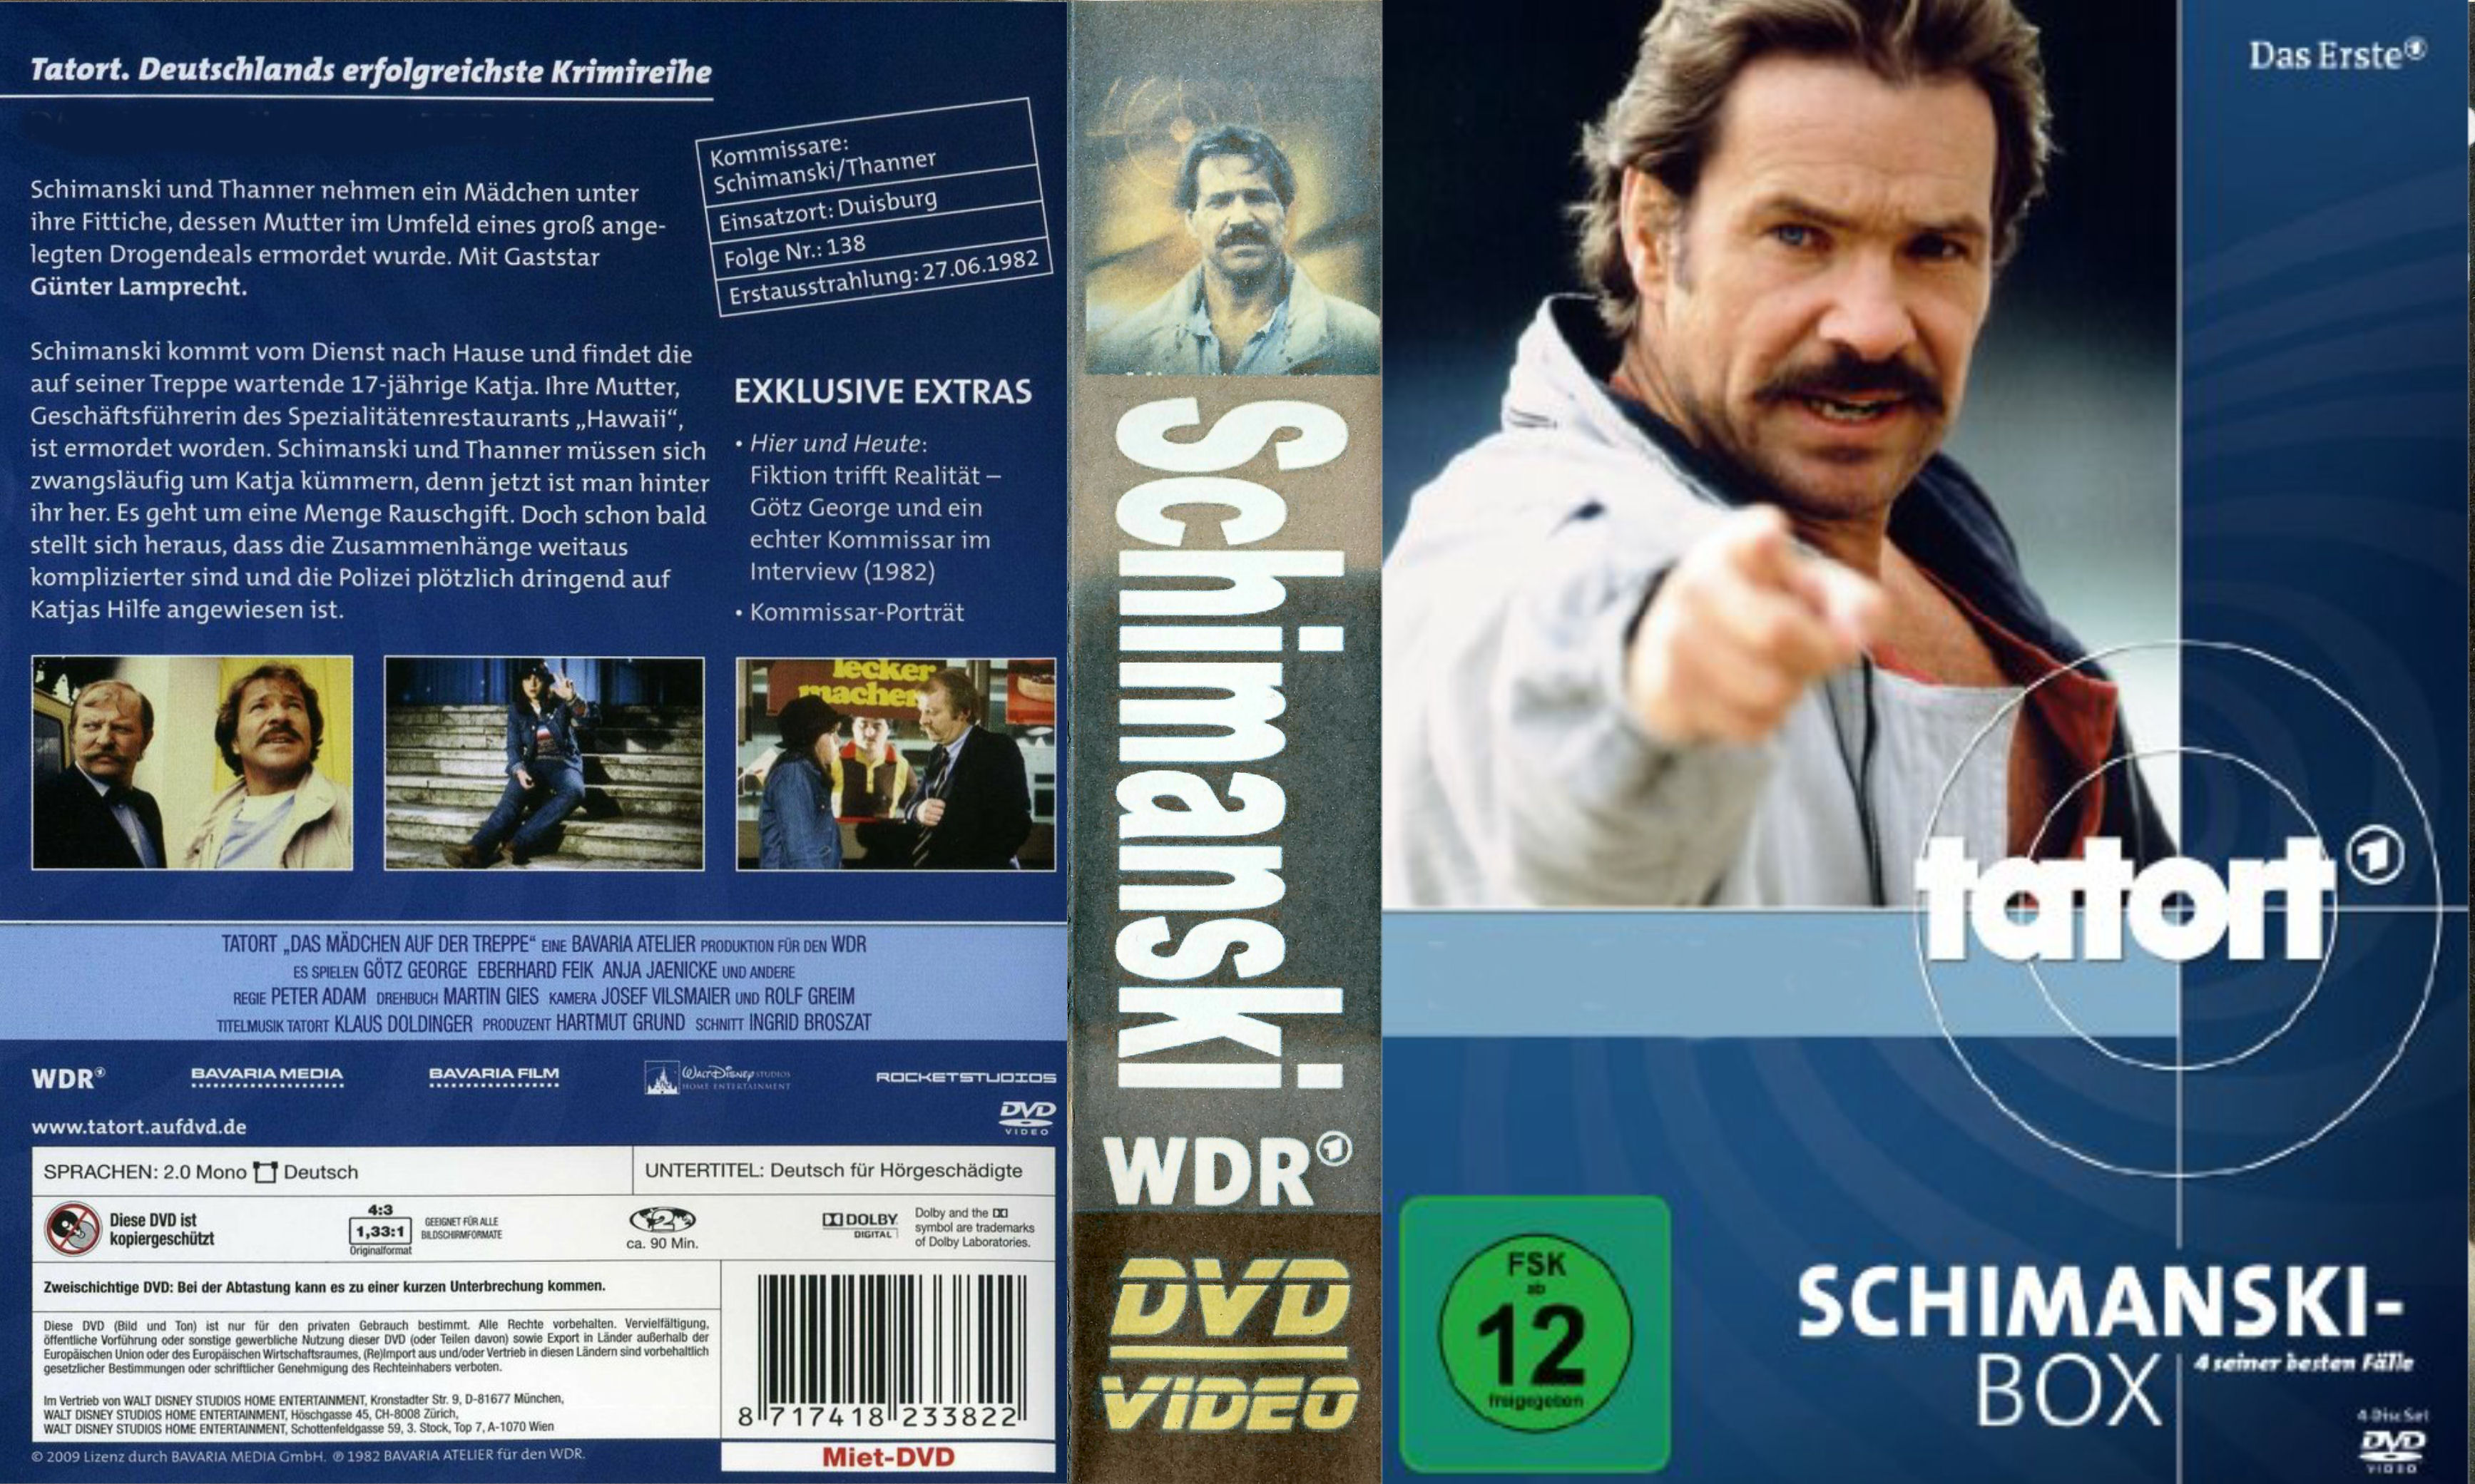 Schimanski Collectie Tatort No Subs - DvD 12